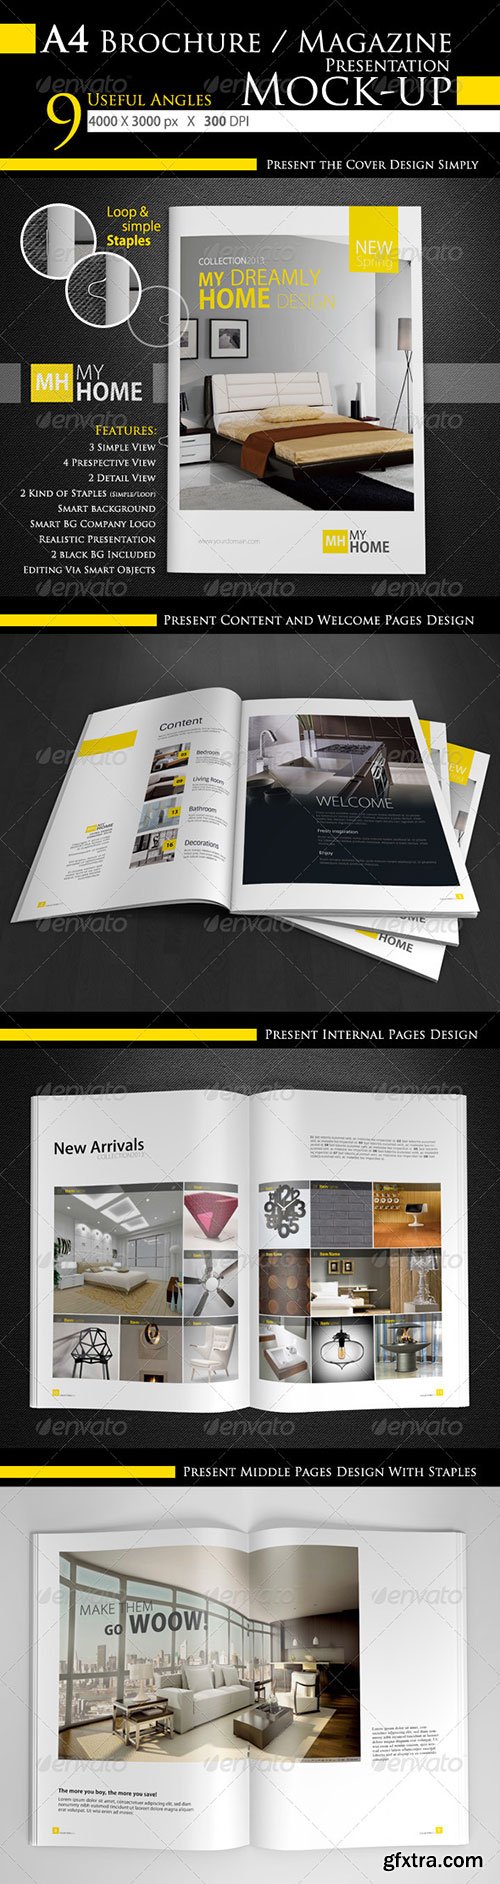 GraphicRiver - Photorealistic A4 Brochure / Magazine Mock-Up